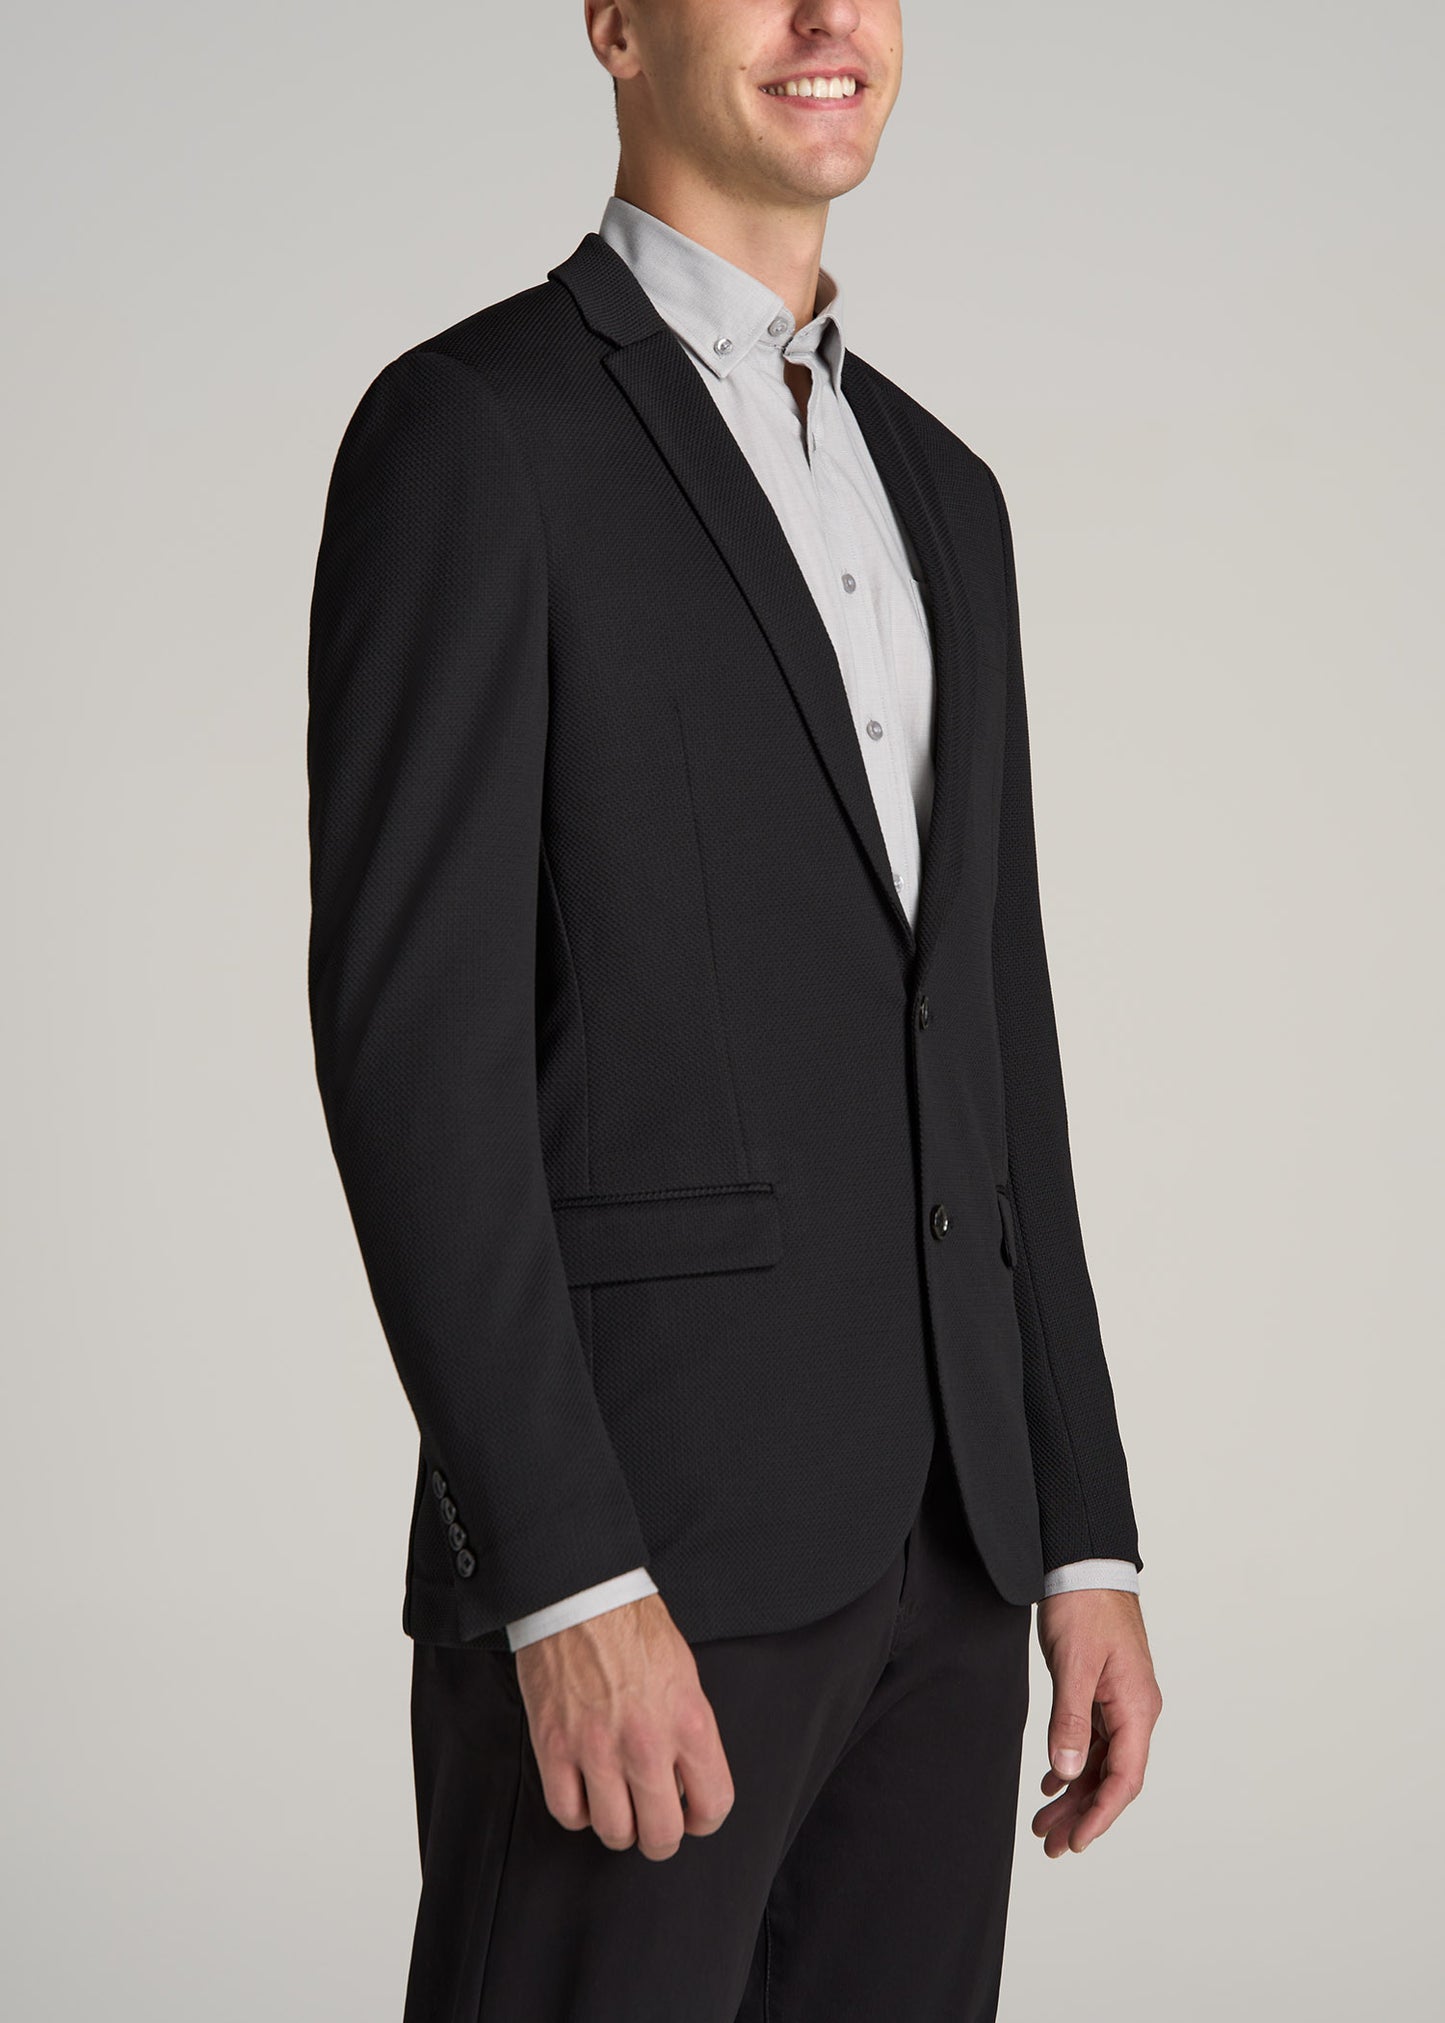 Textured Blazer for Tall Men in Black